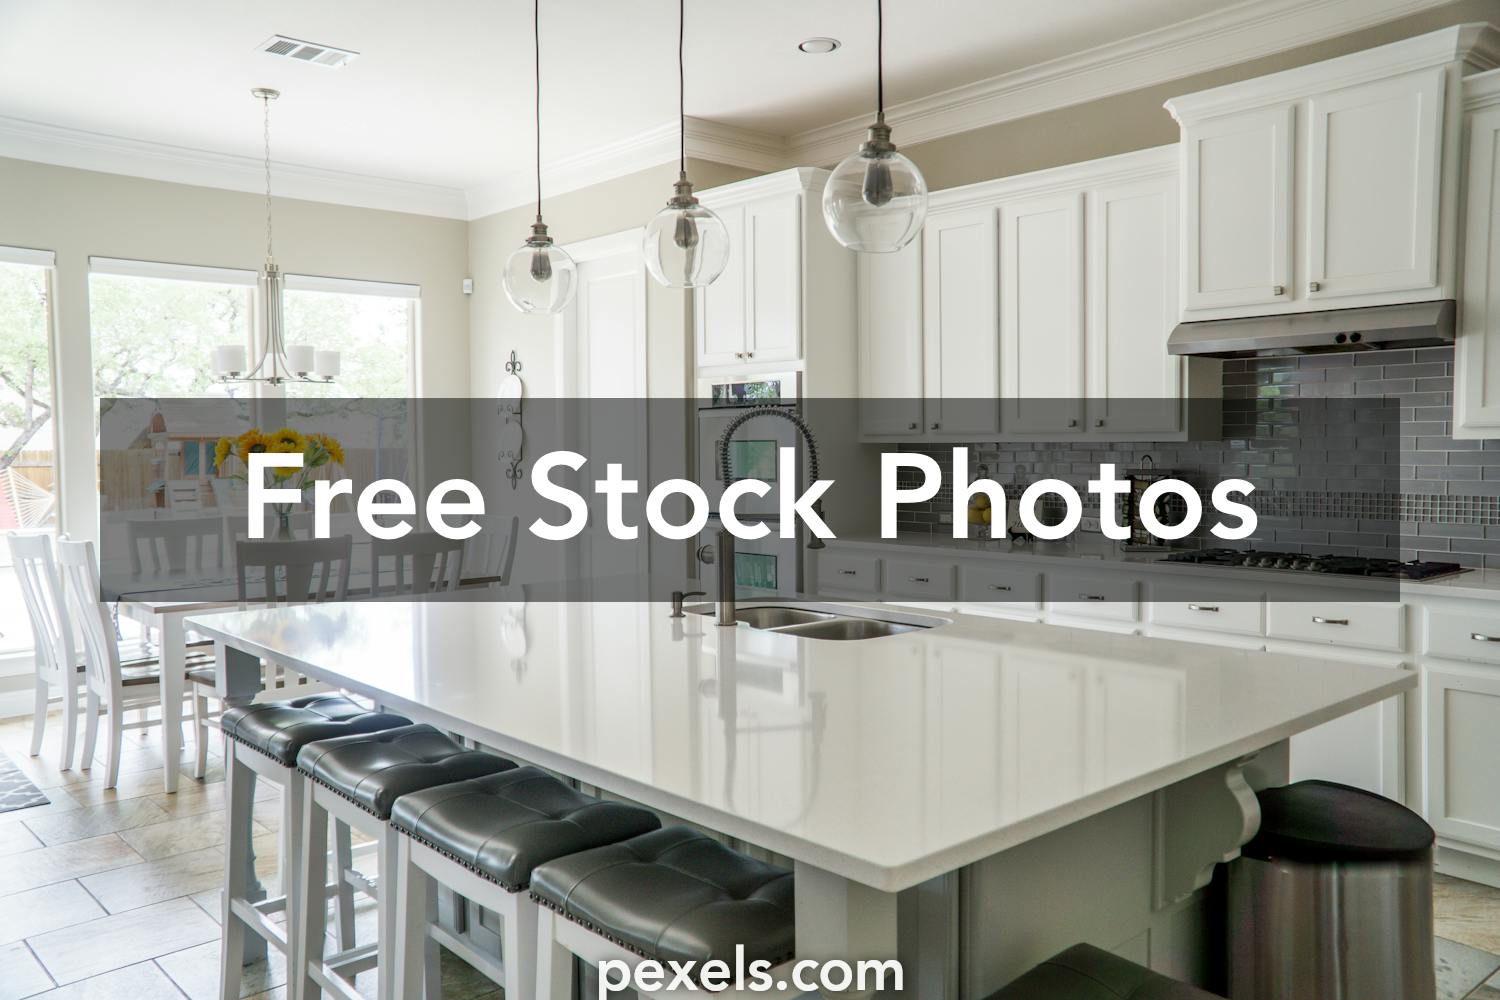 000 Best Kitchen Photos 100 Free Download Pexels Stock Photos